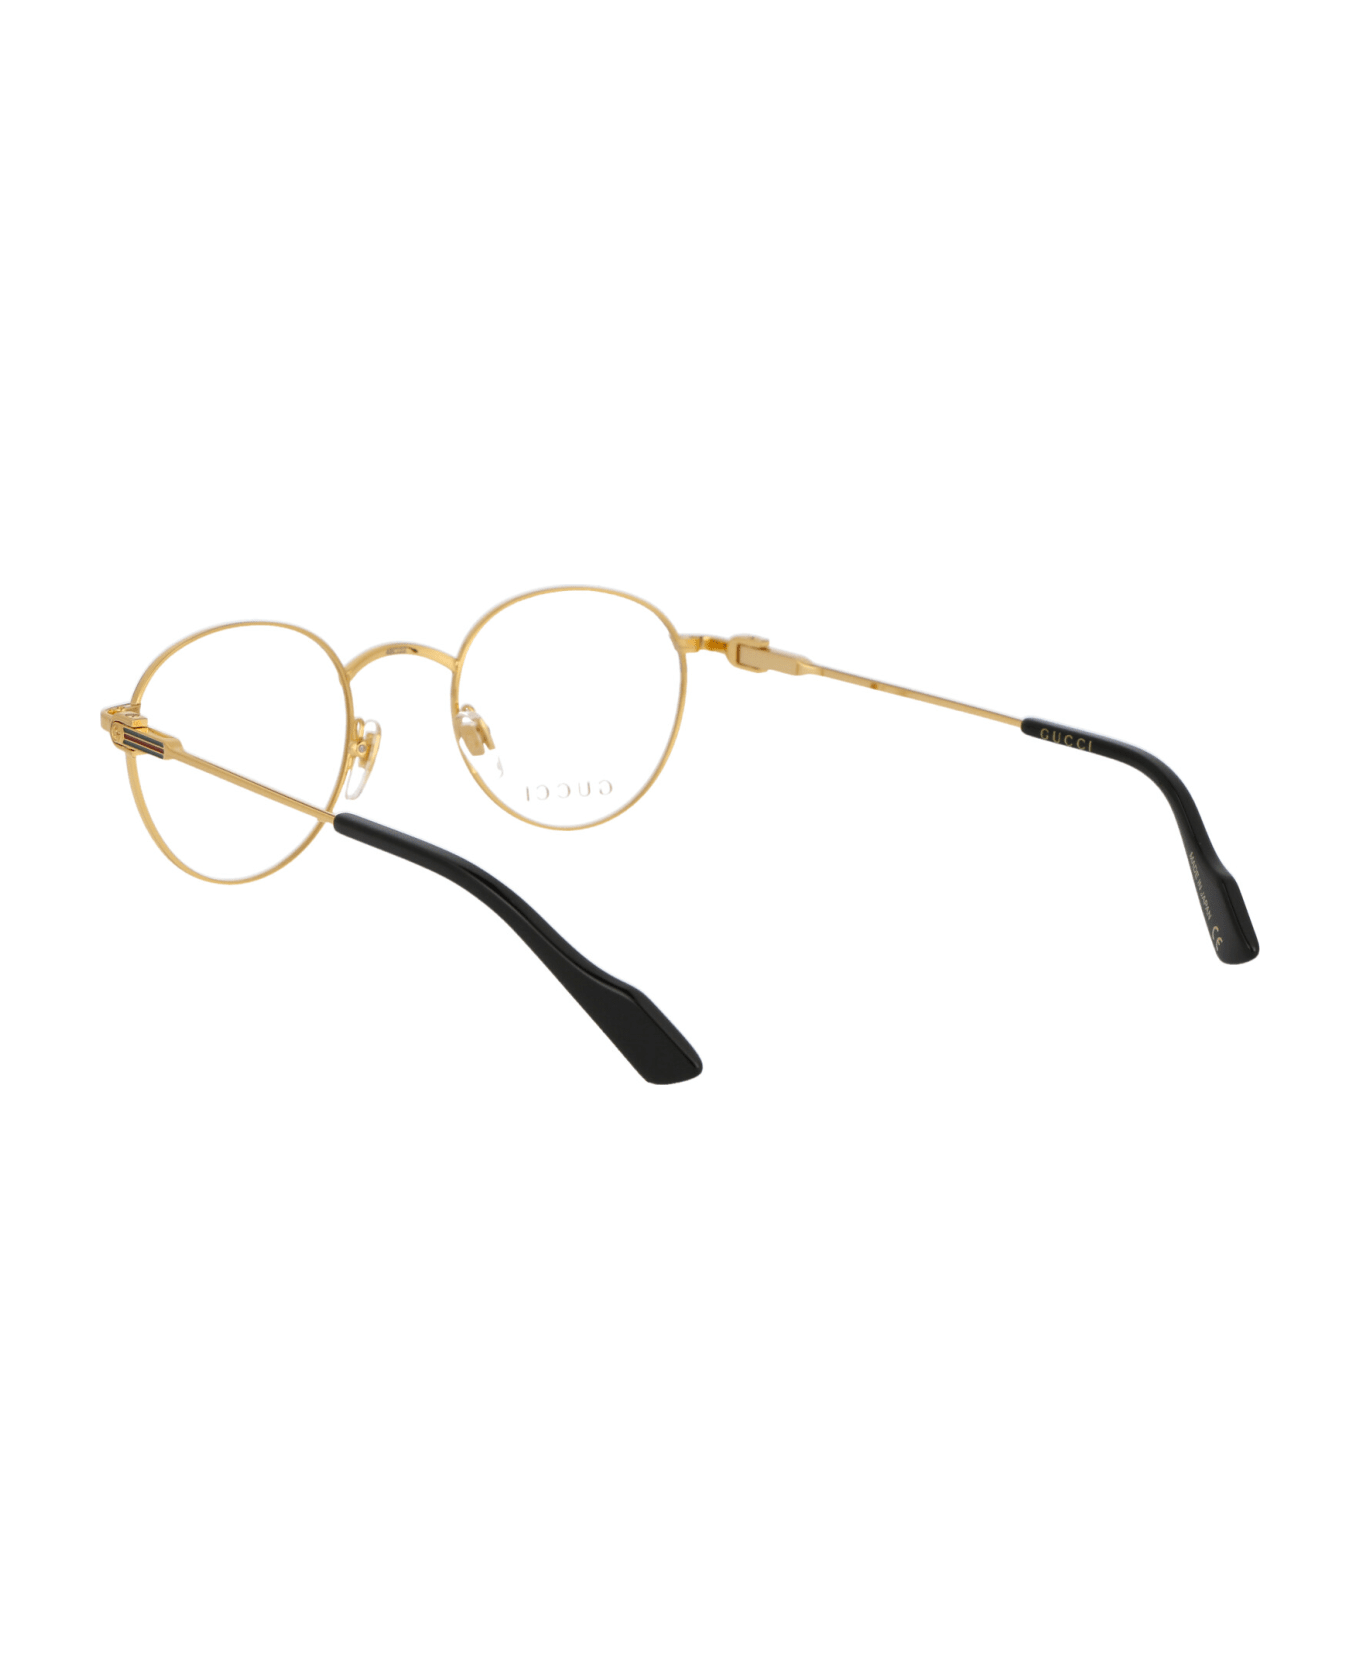 Gucci Eyewear Gg1222o Glasses - 001 GOLD GOLD TRANSPARENT